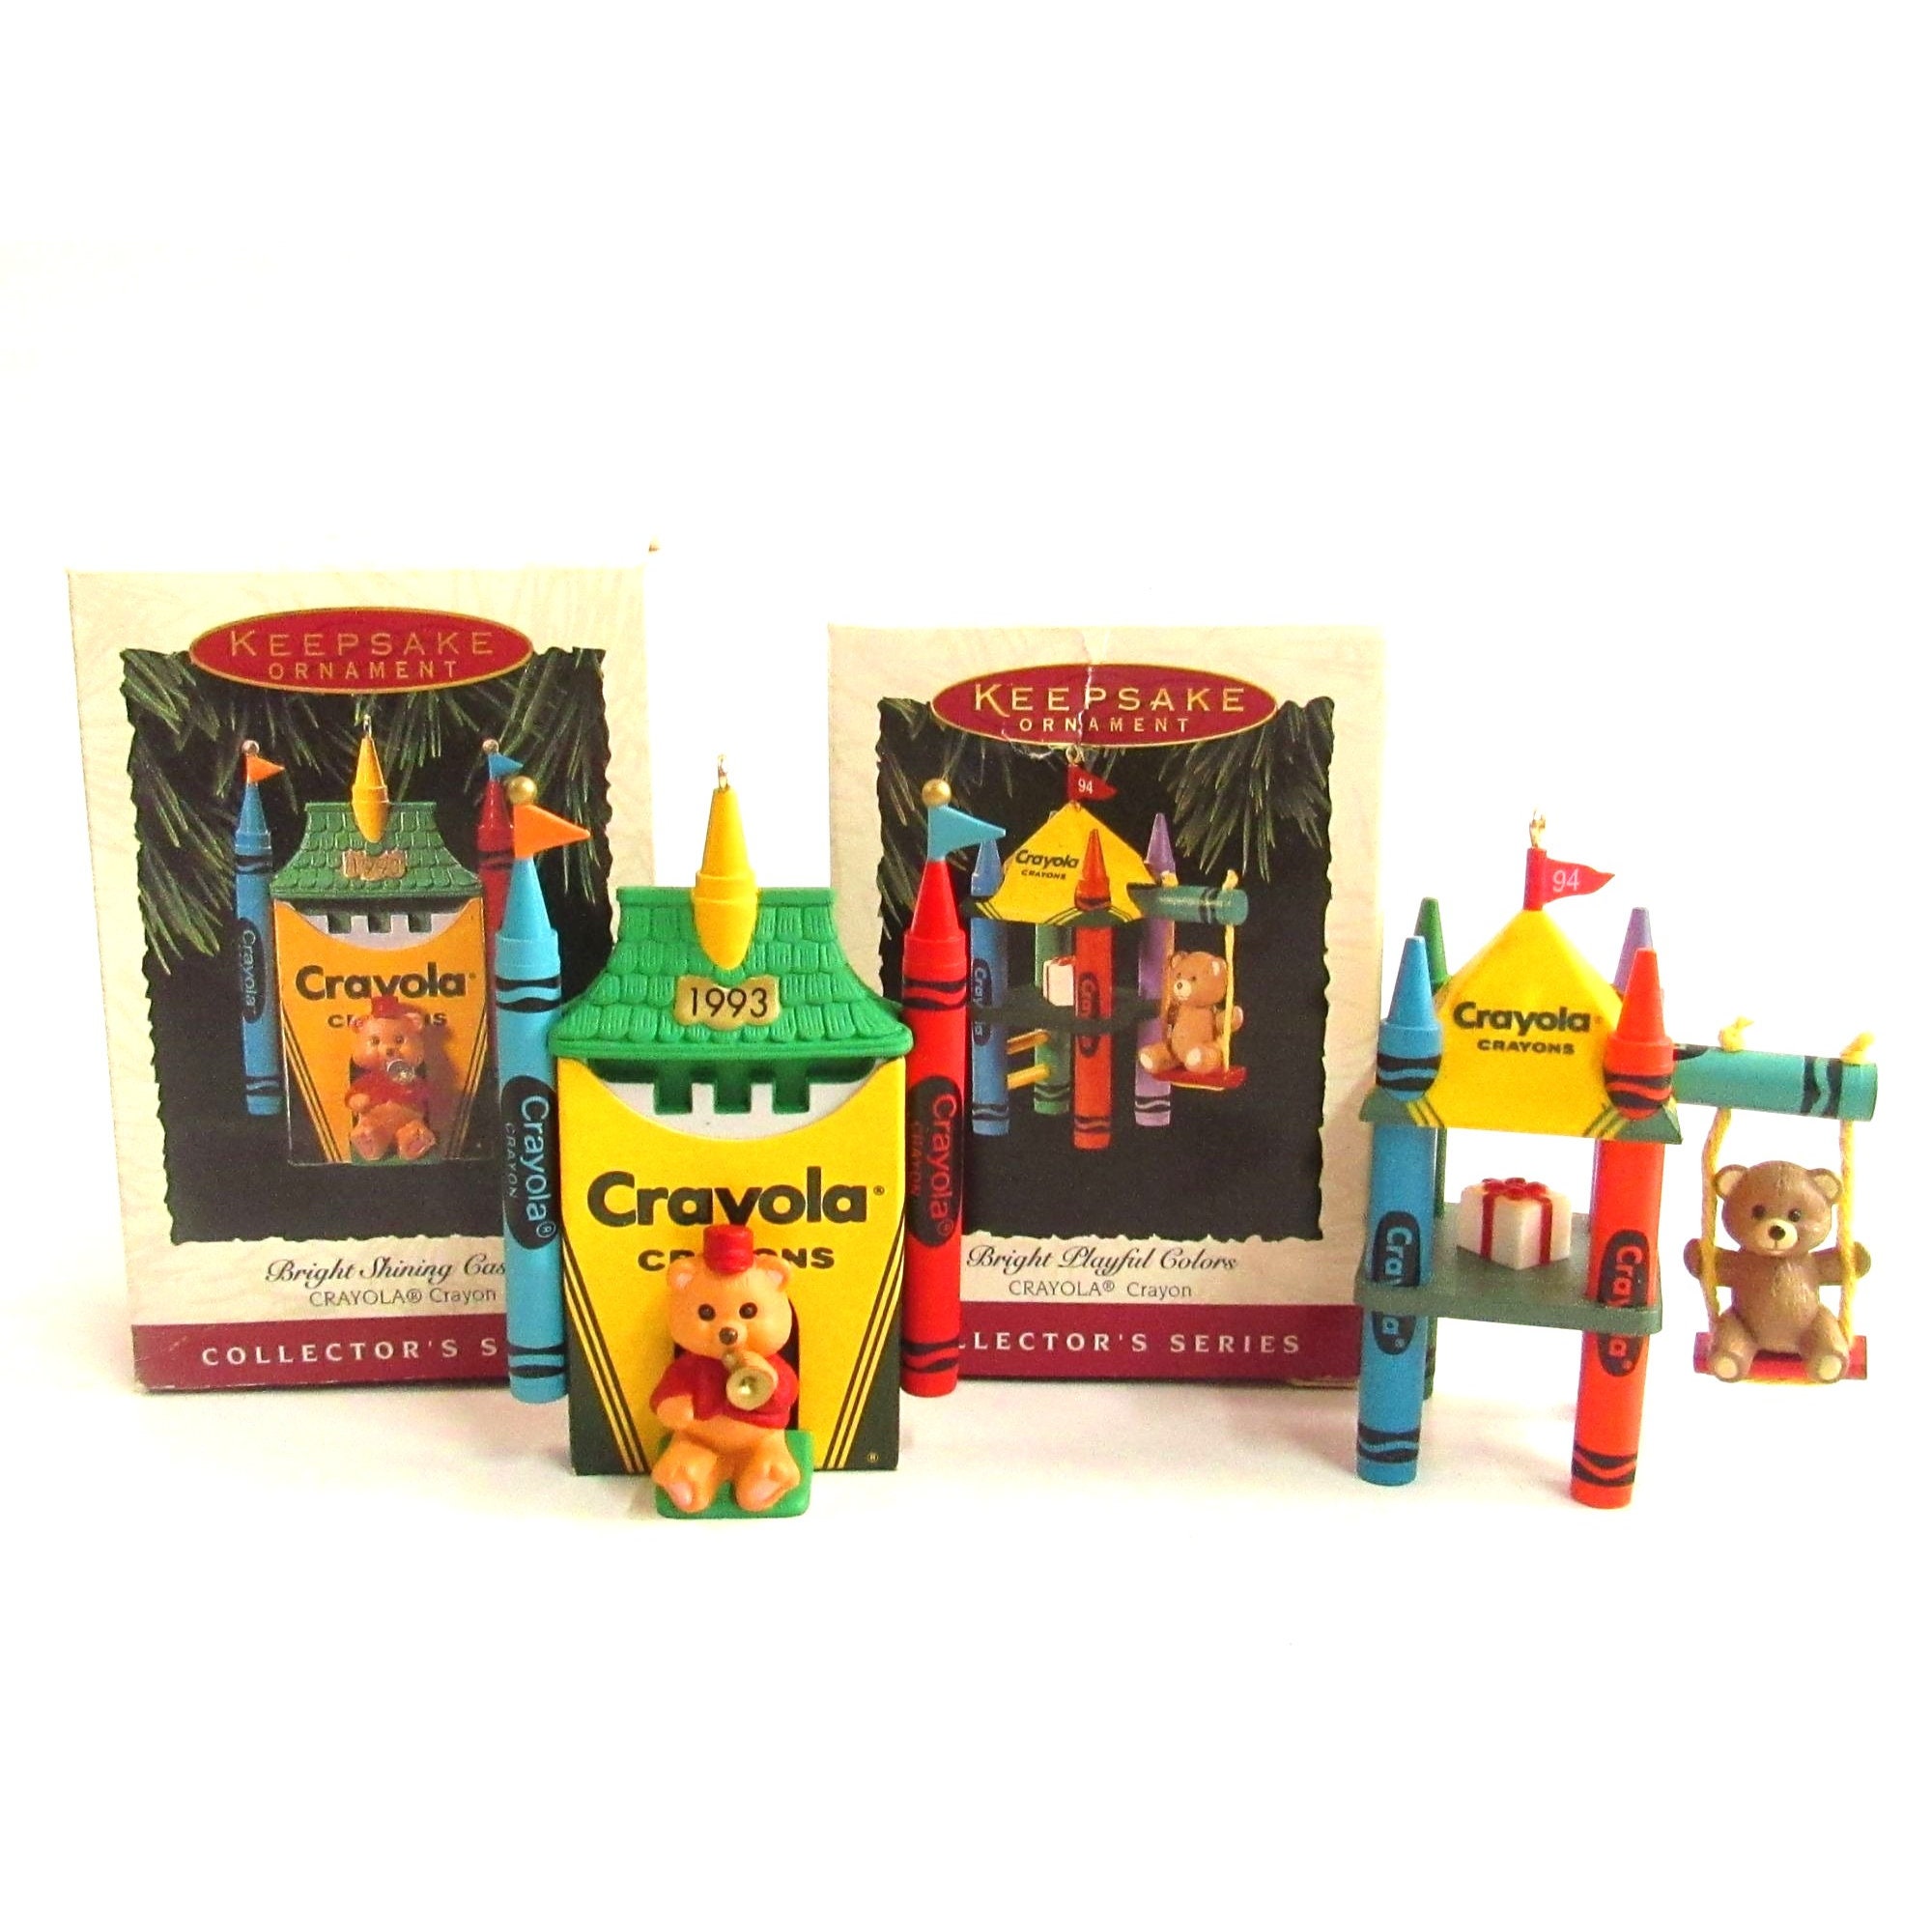 Hallmark Keepsake 2016 Crayola Crayons Big Box of 64 Christmas Ornament